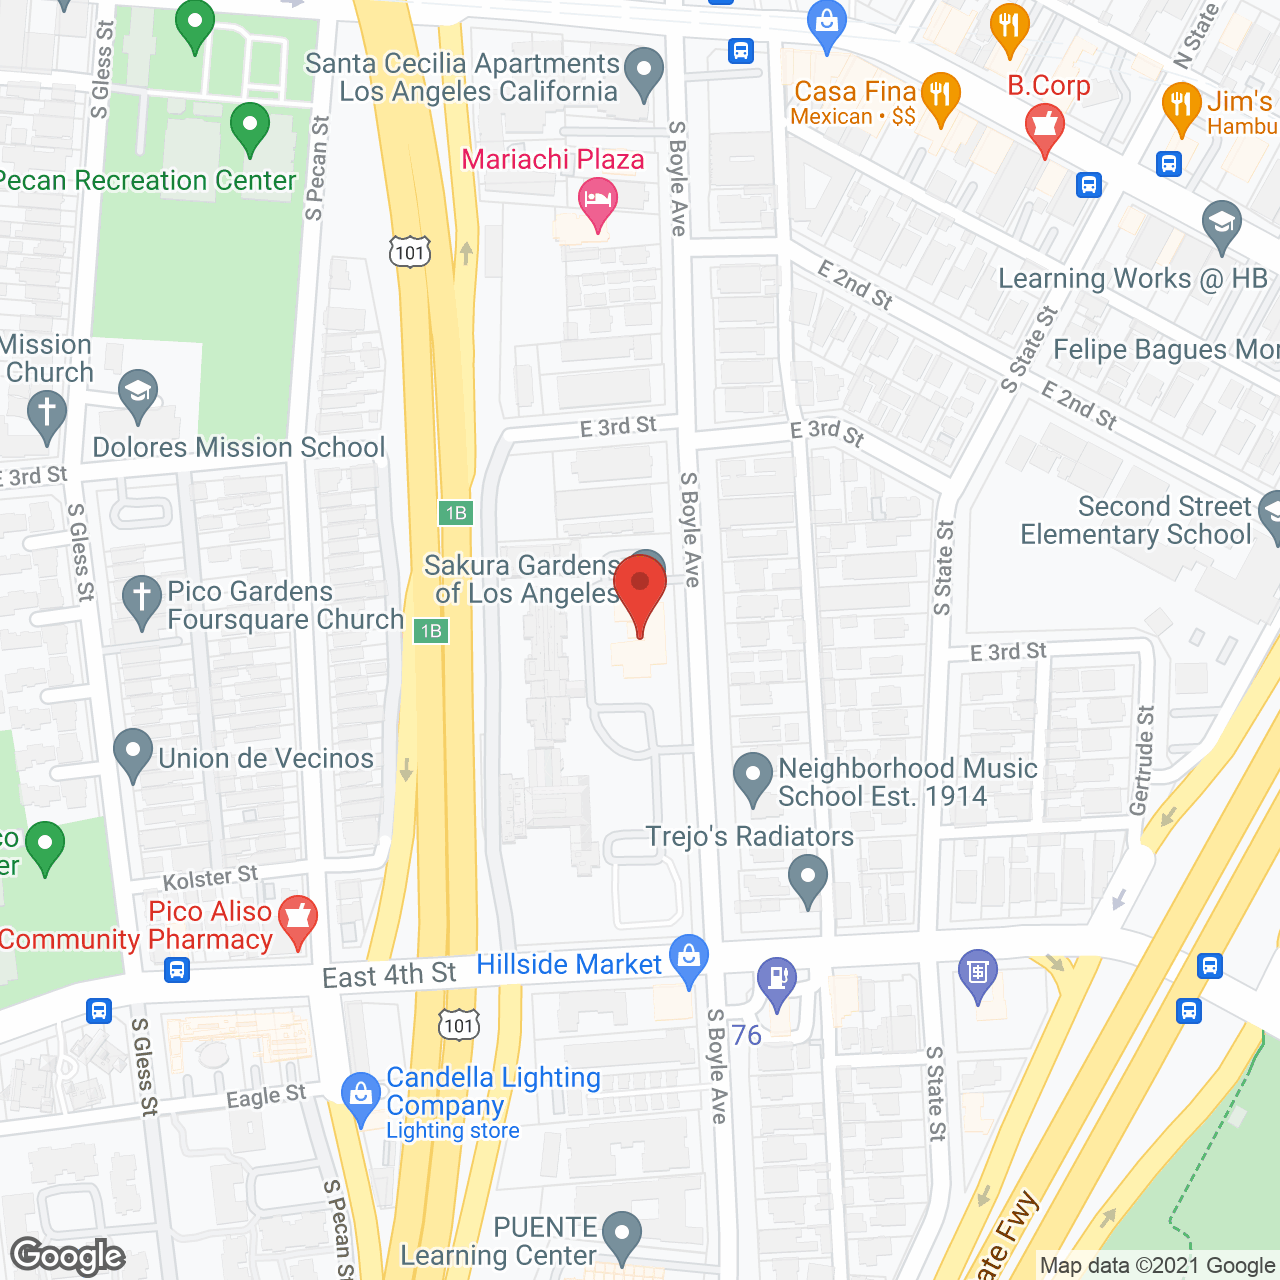 Sakura Gardens of Los Angeles in google map